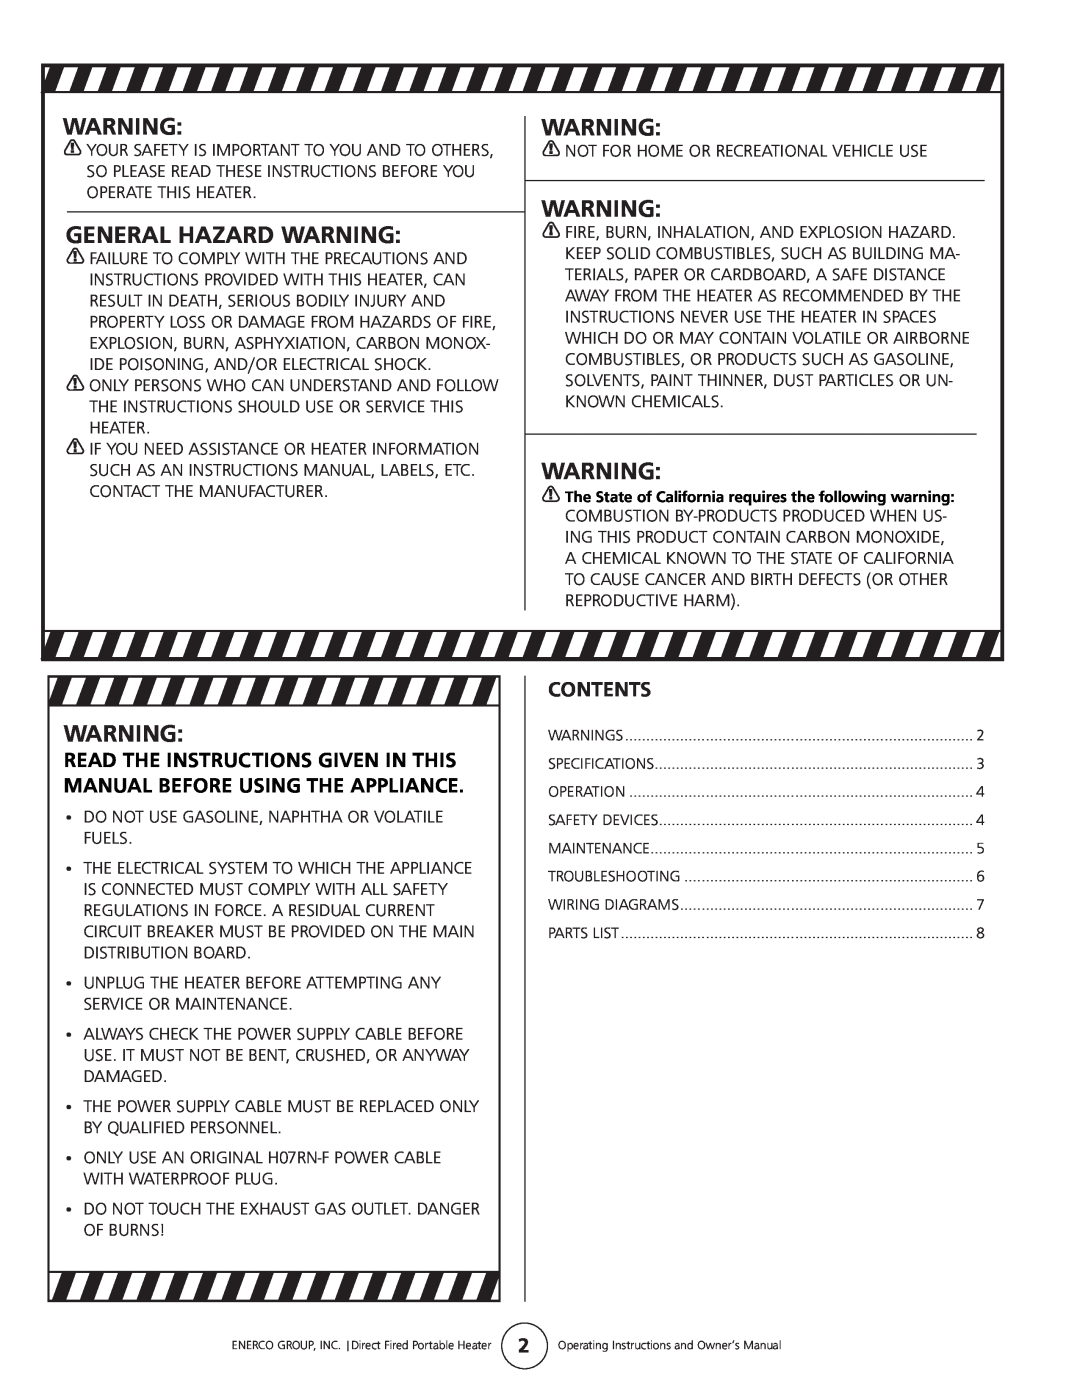 Enerco 3500DF owner manual General Hazard Warning, Contents 